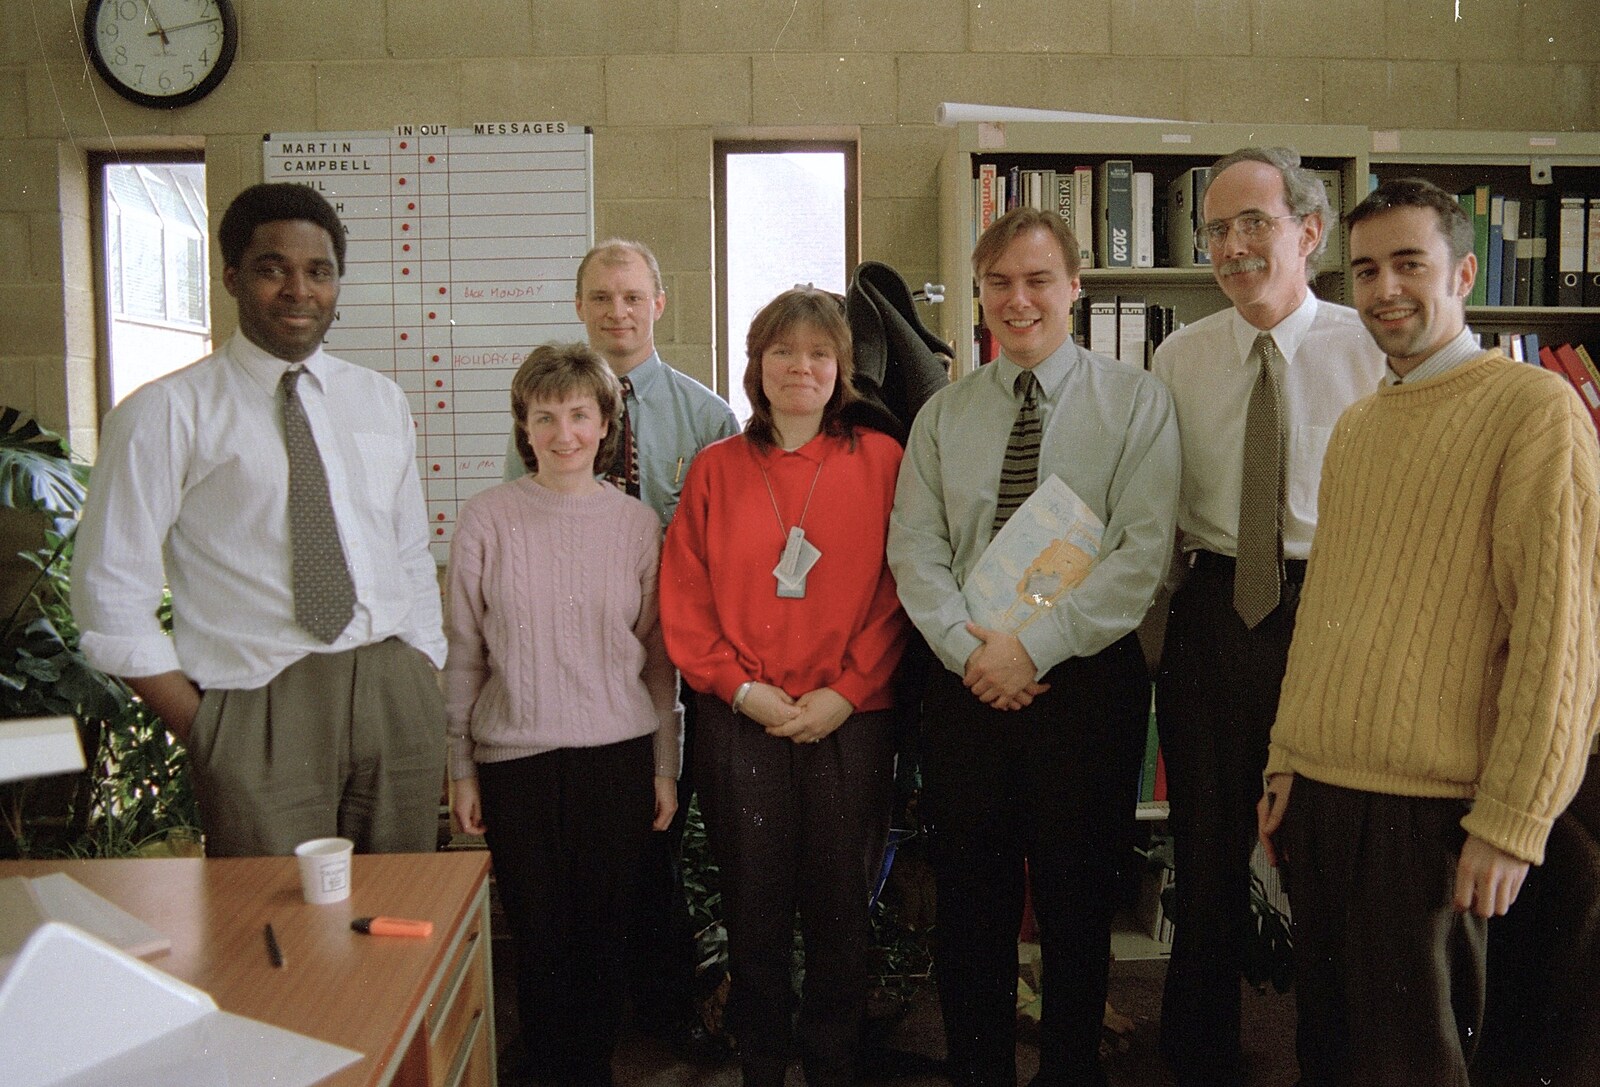 Campbell Leaves CISU, Suffolk County Council, Ipswich, Suffolk - 4th May 1996: Carl Rhoden, Alan Leach, Sheila Gardiner, Campbell, Martin and Trevor Smith